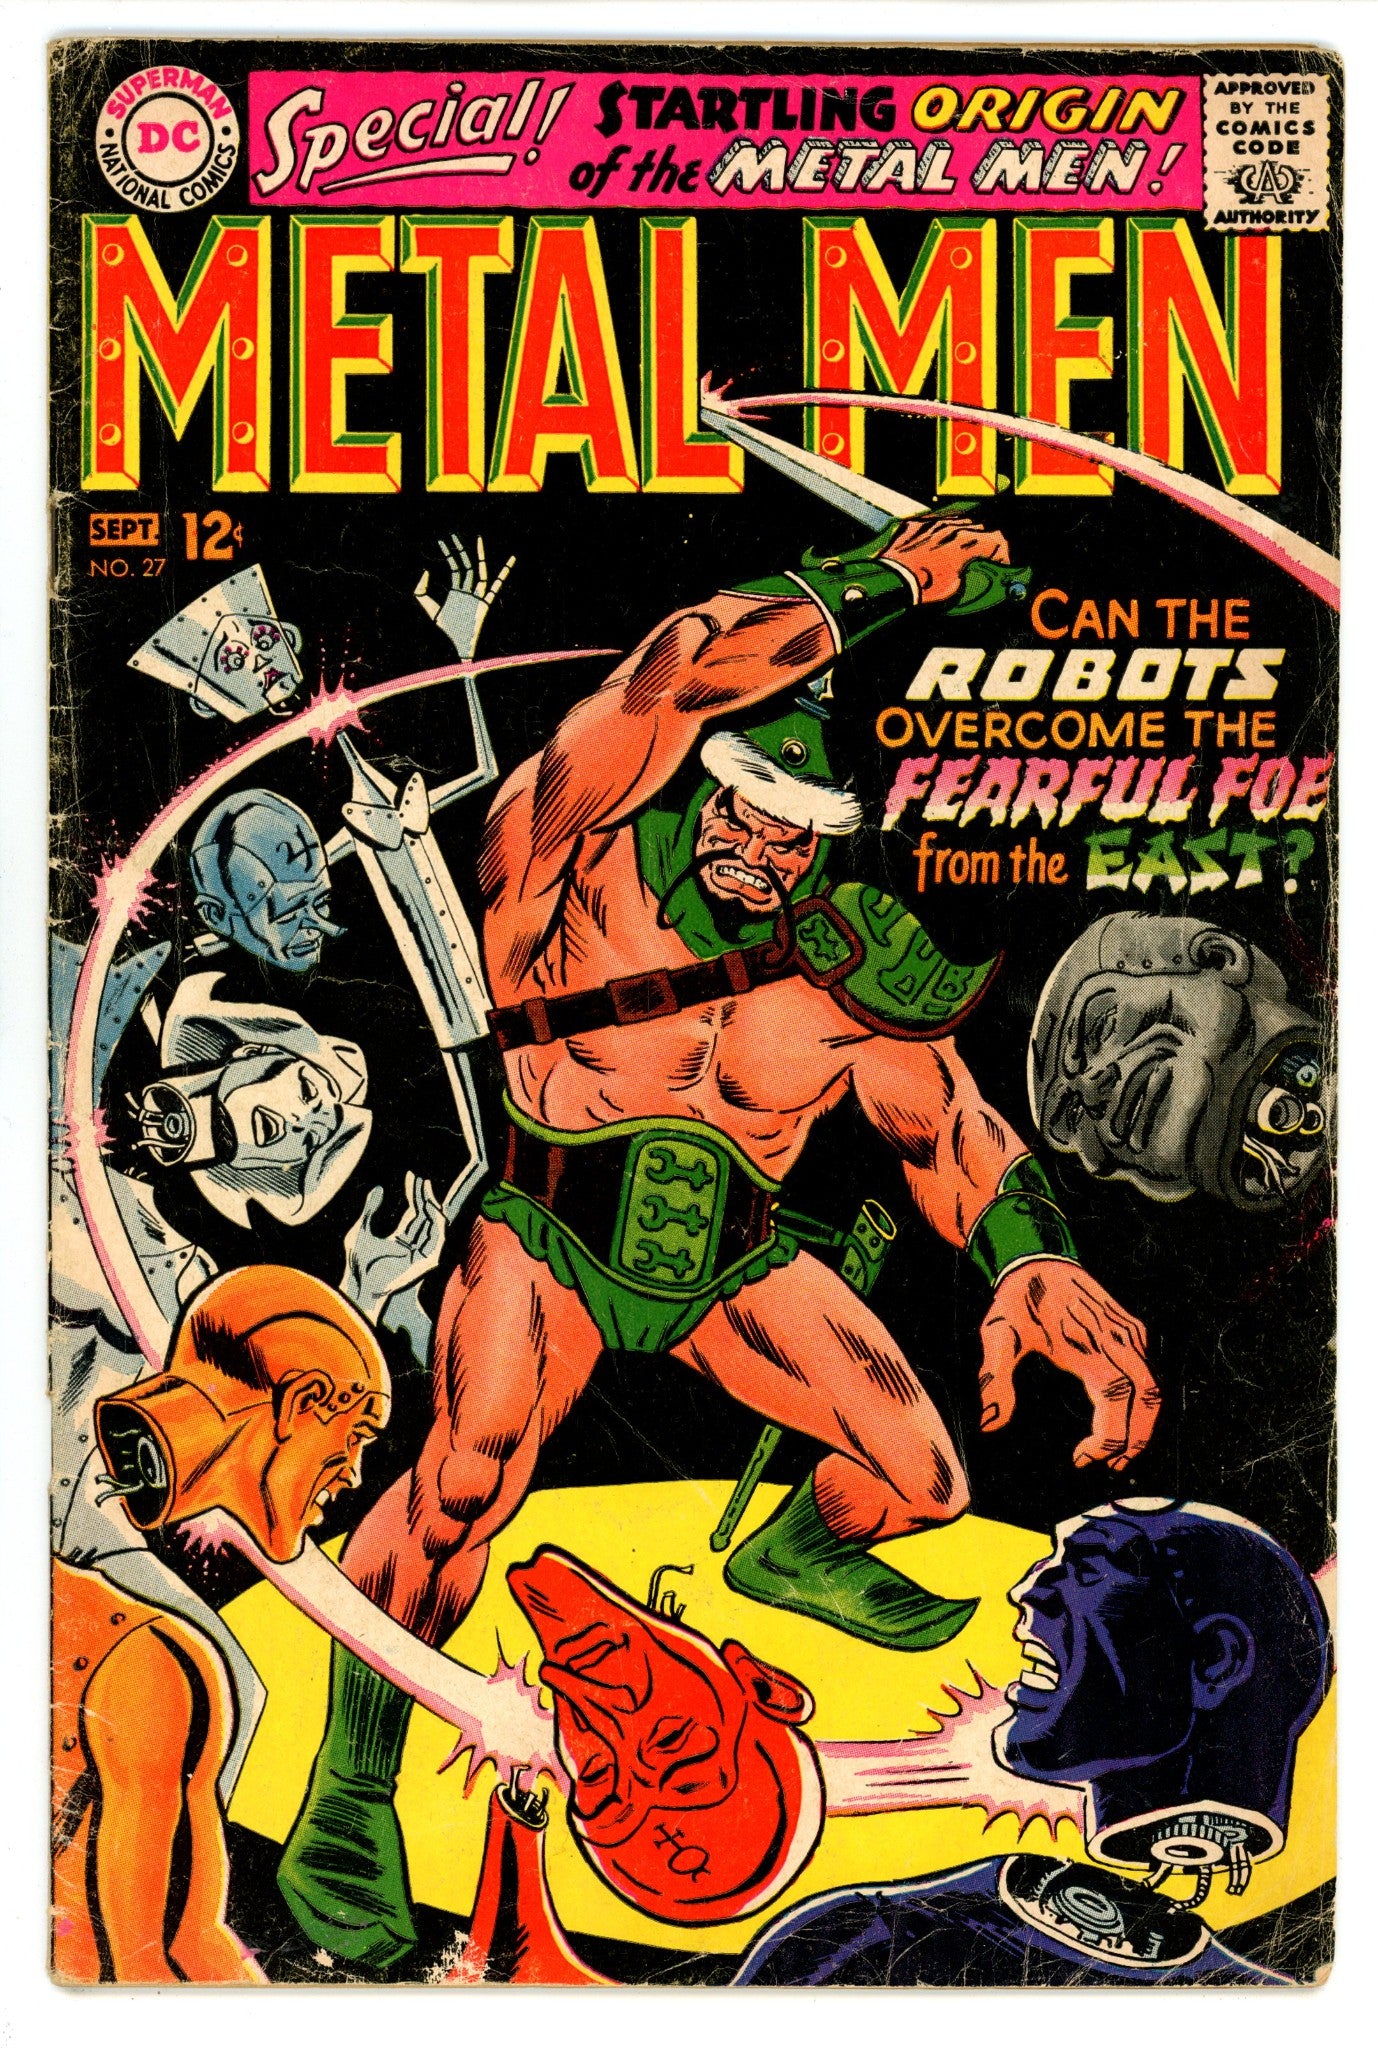 Metal Men Vol 1 27 GD/VG (3.0) (1967) 